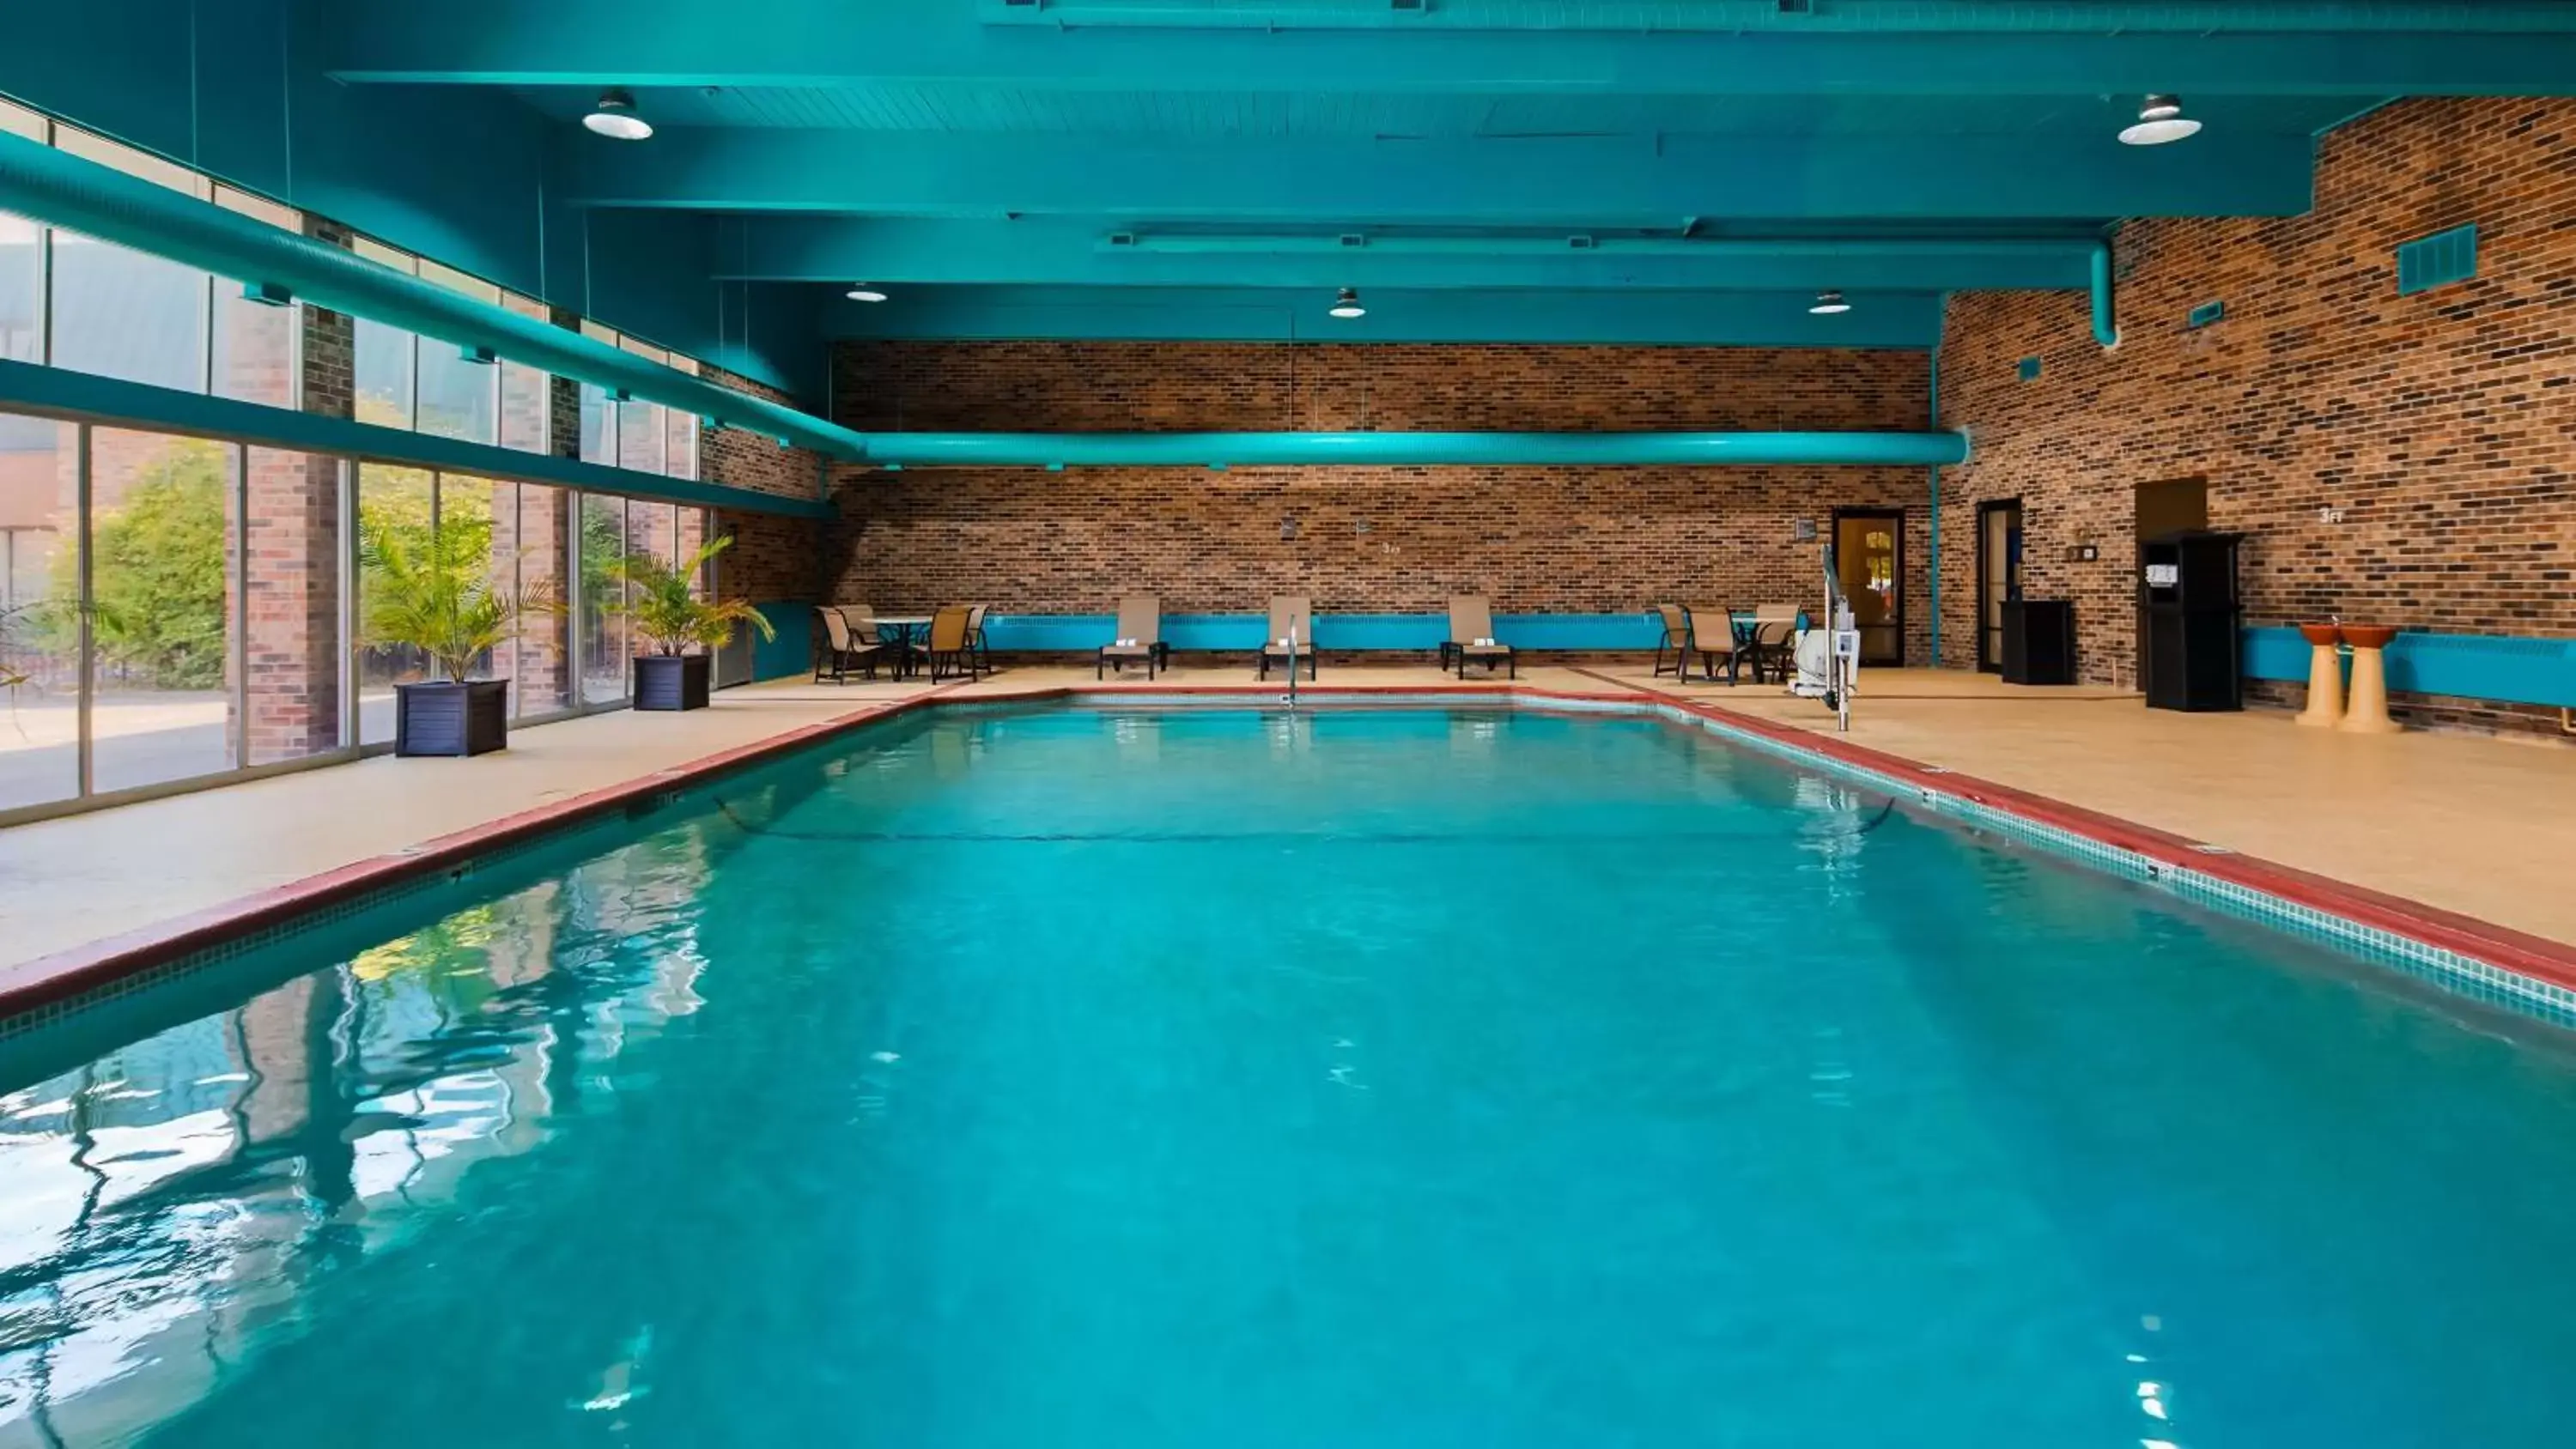 On site, Swimming Pool in Best Western Woodhaven Inn